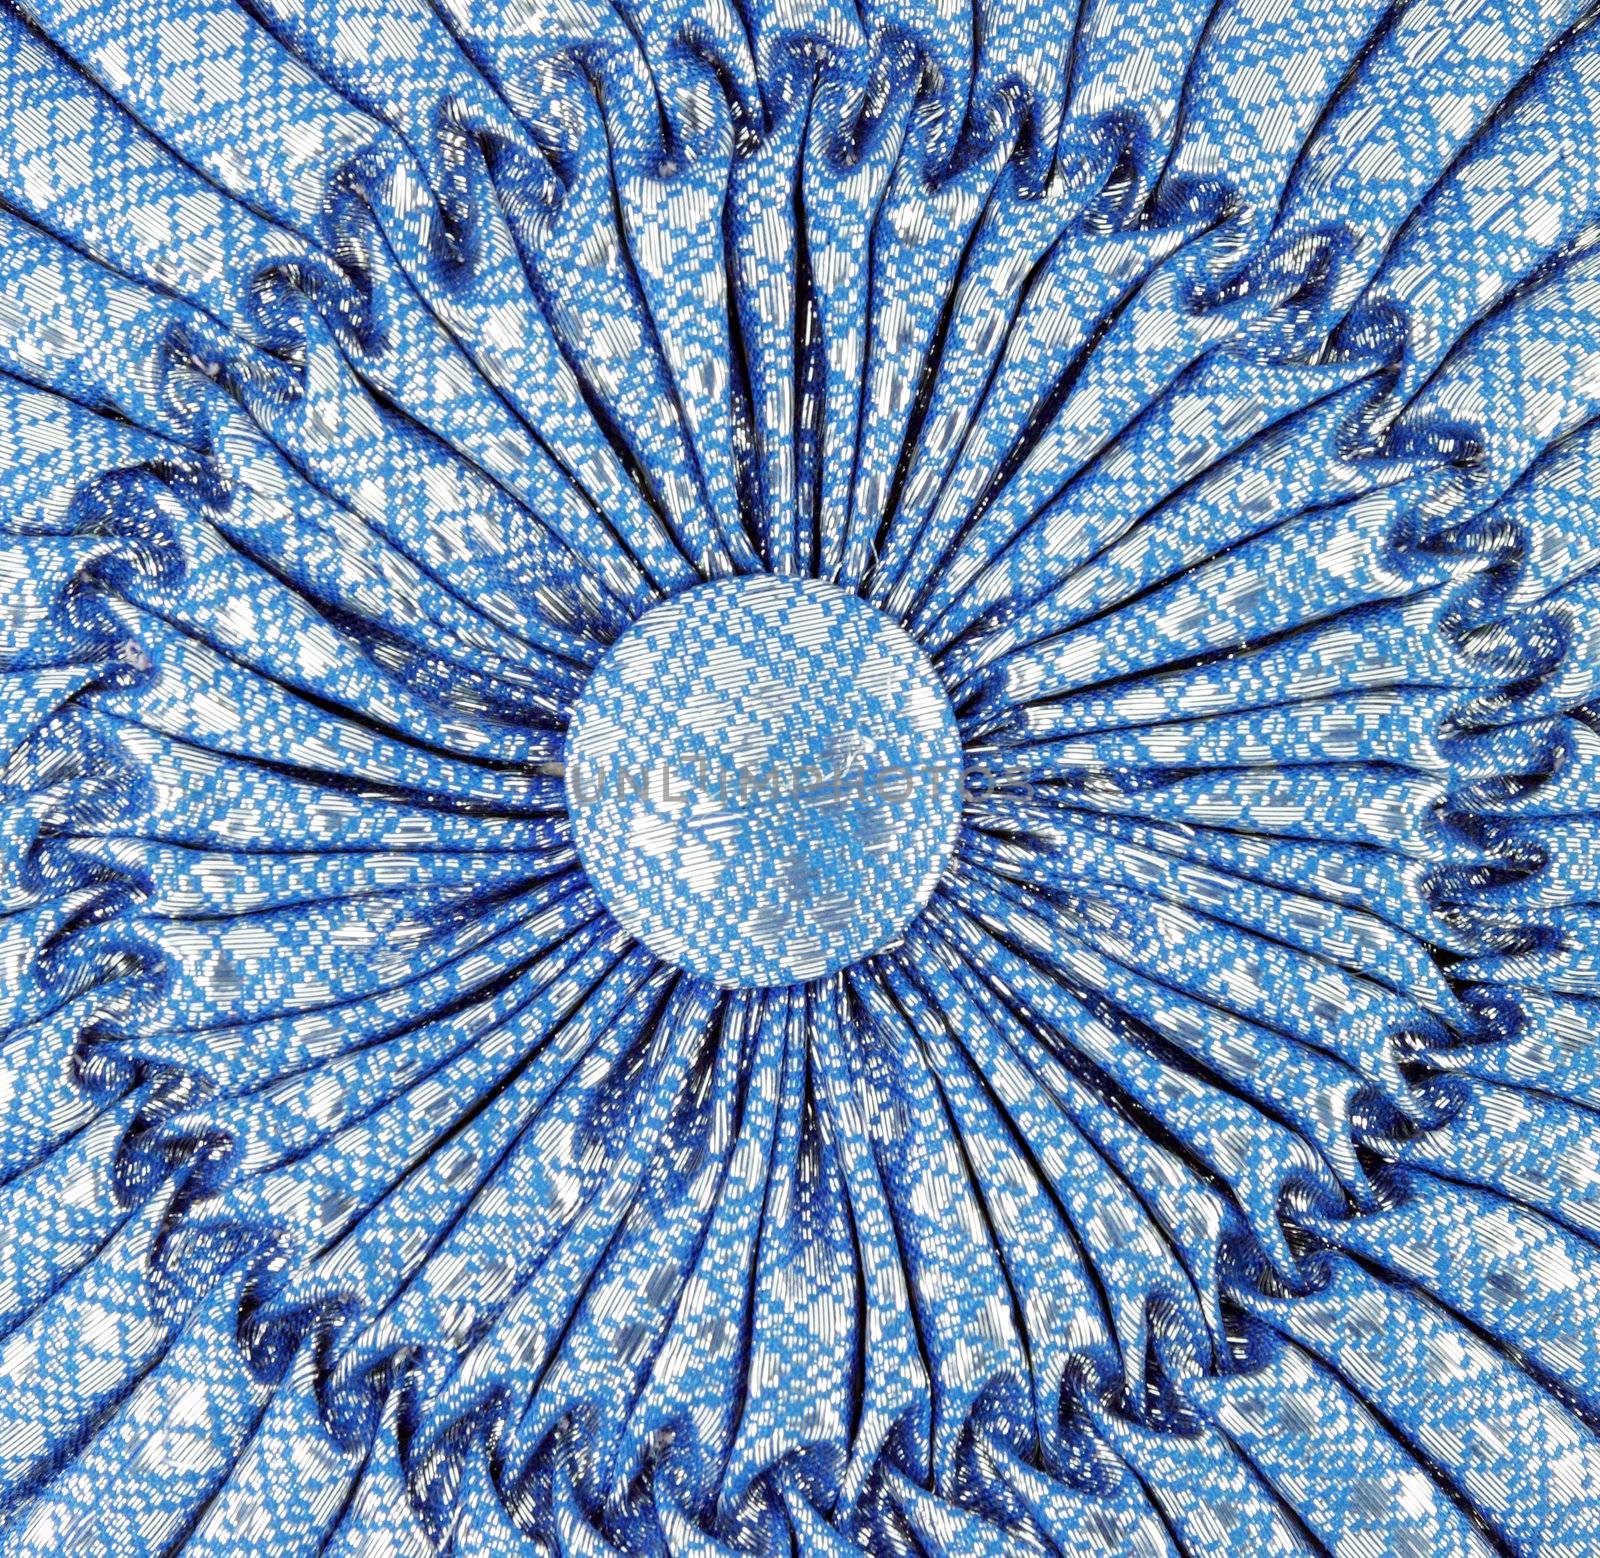 Thai textile on blue pillow by geargodz